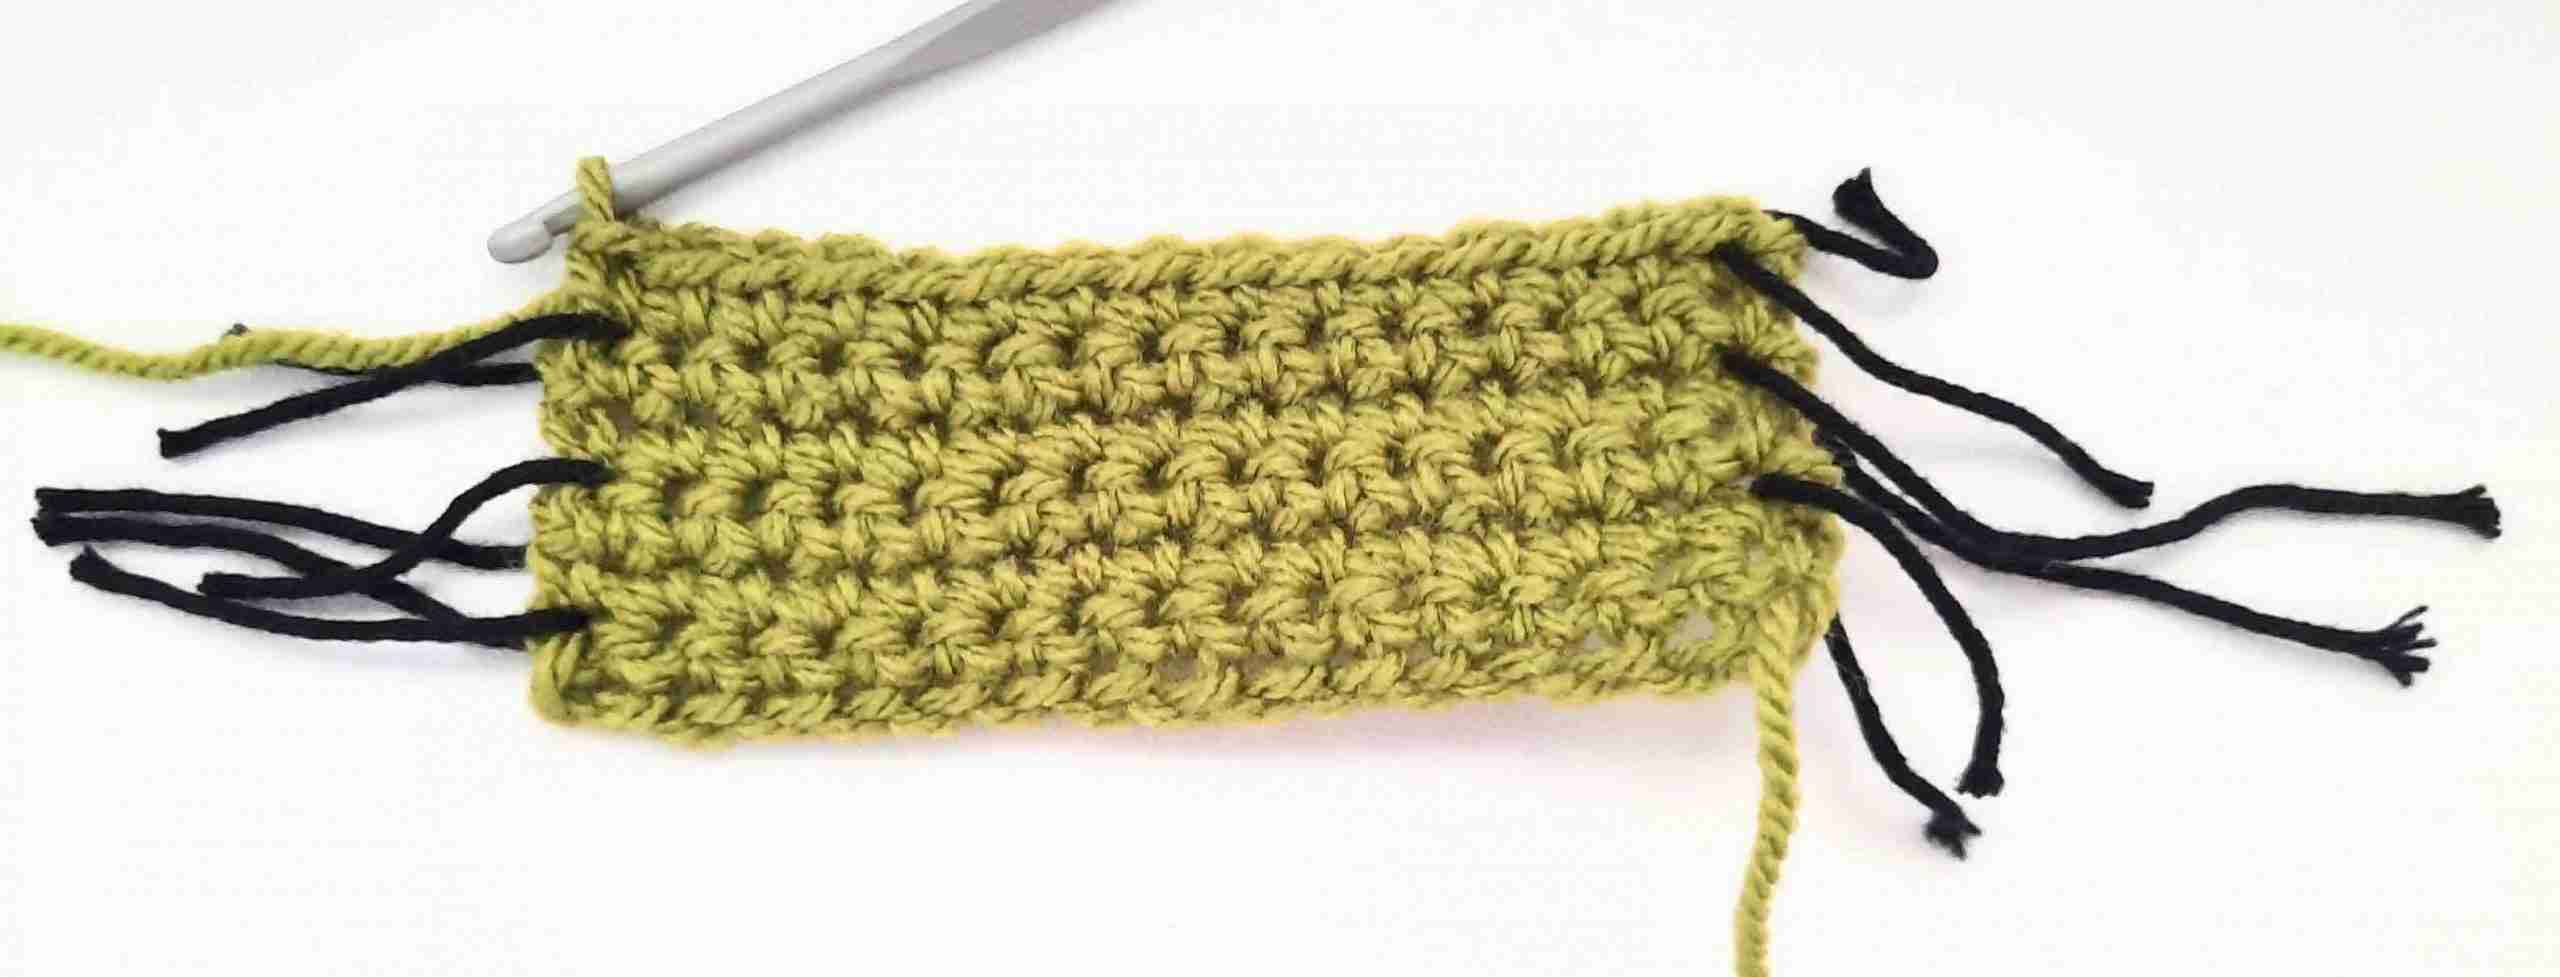 Crochet Striaght Edges Every Time Row 4